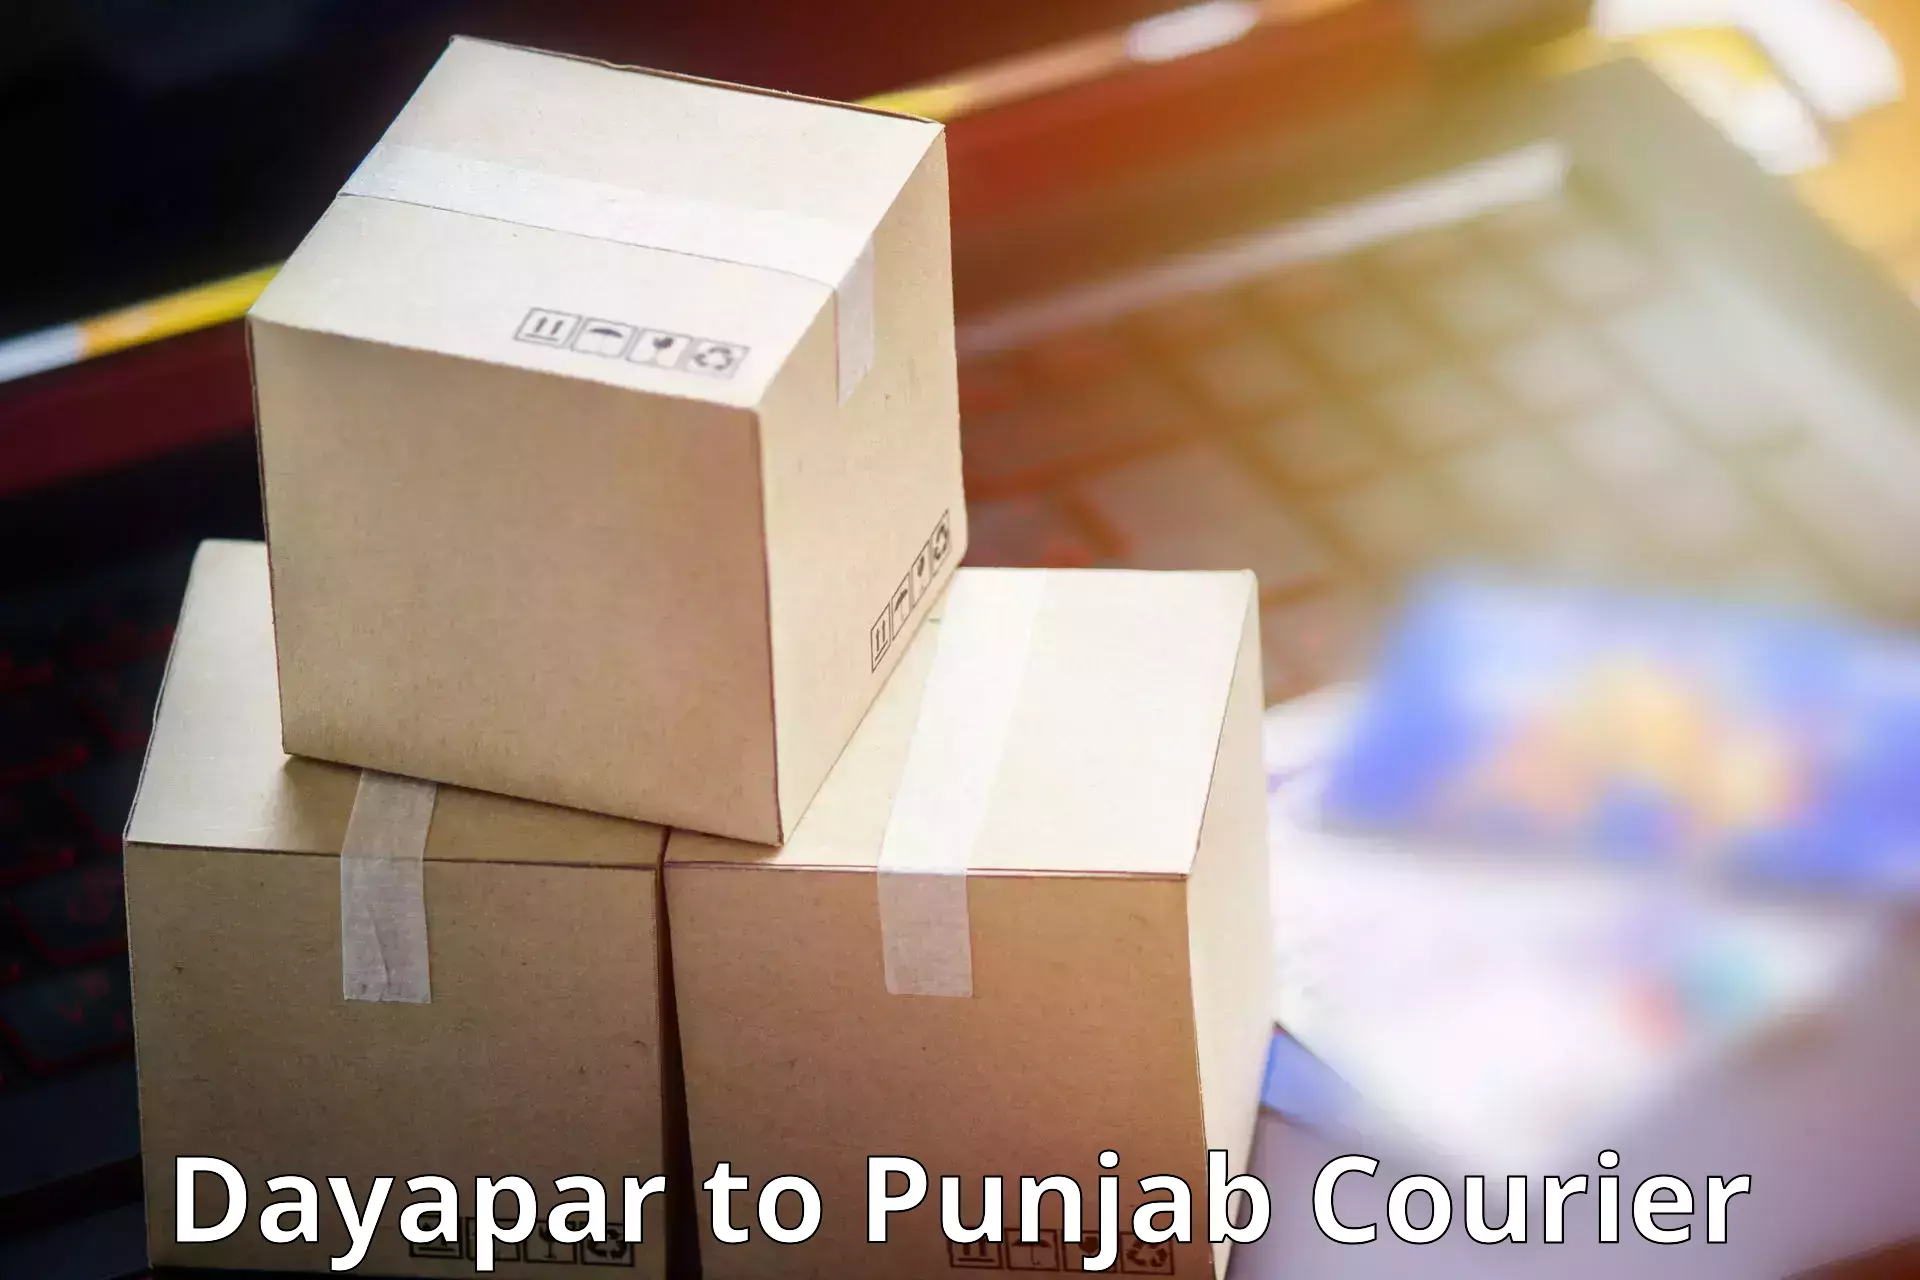 Courier service innovation Dayapar to Sultanpur Lodhi